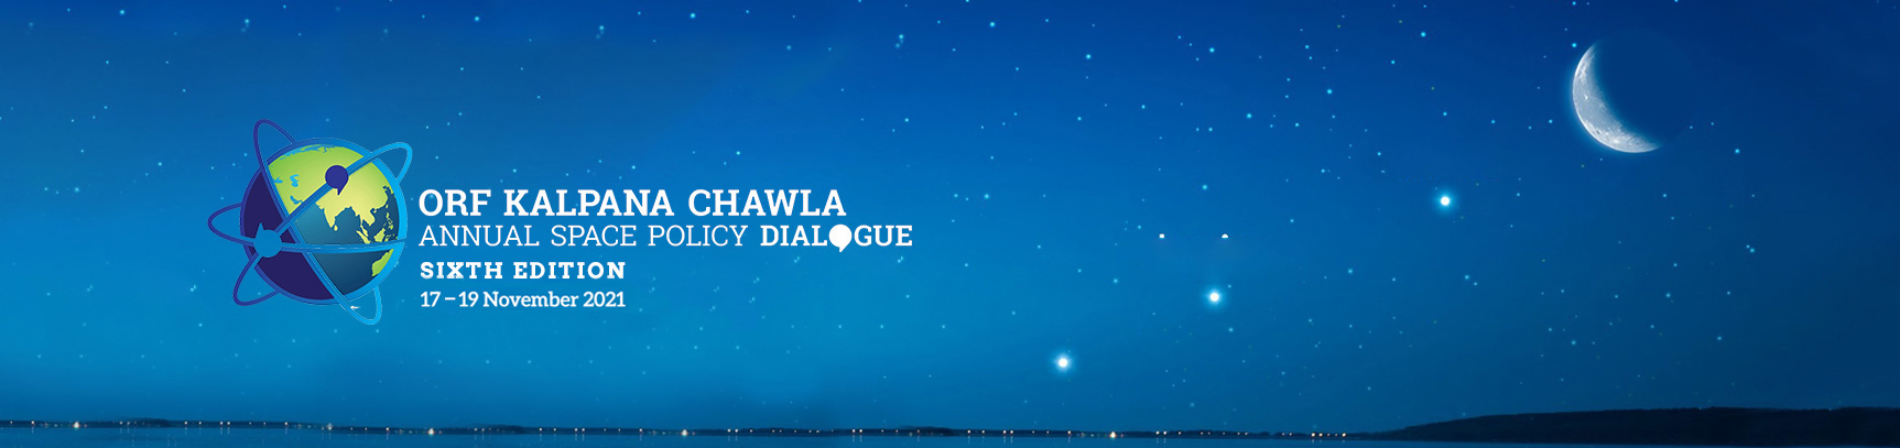 Kalpana Chawla Annual Space Policy Dialogue  